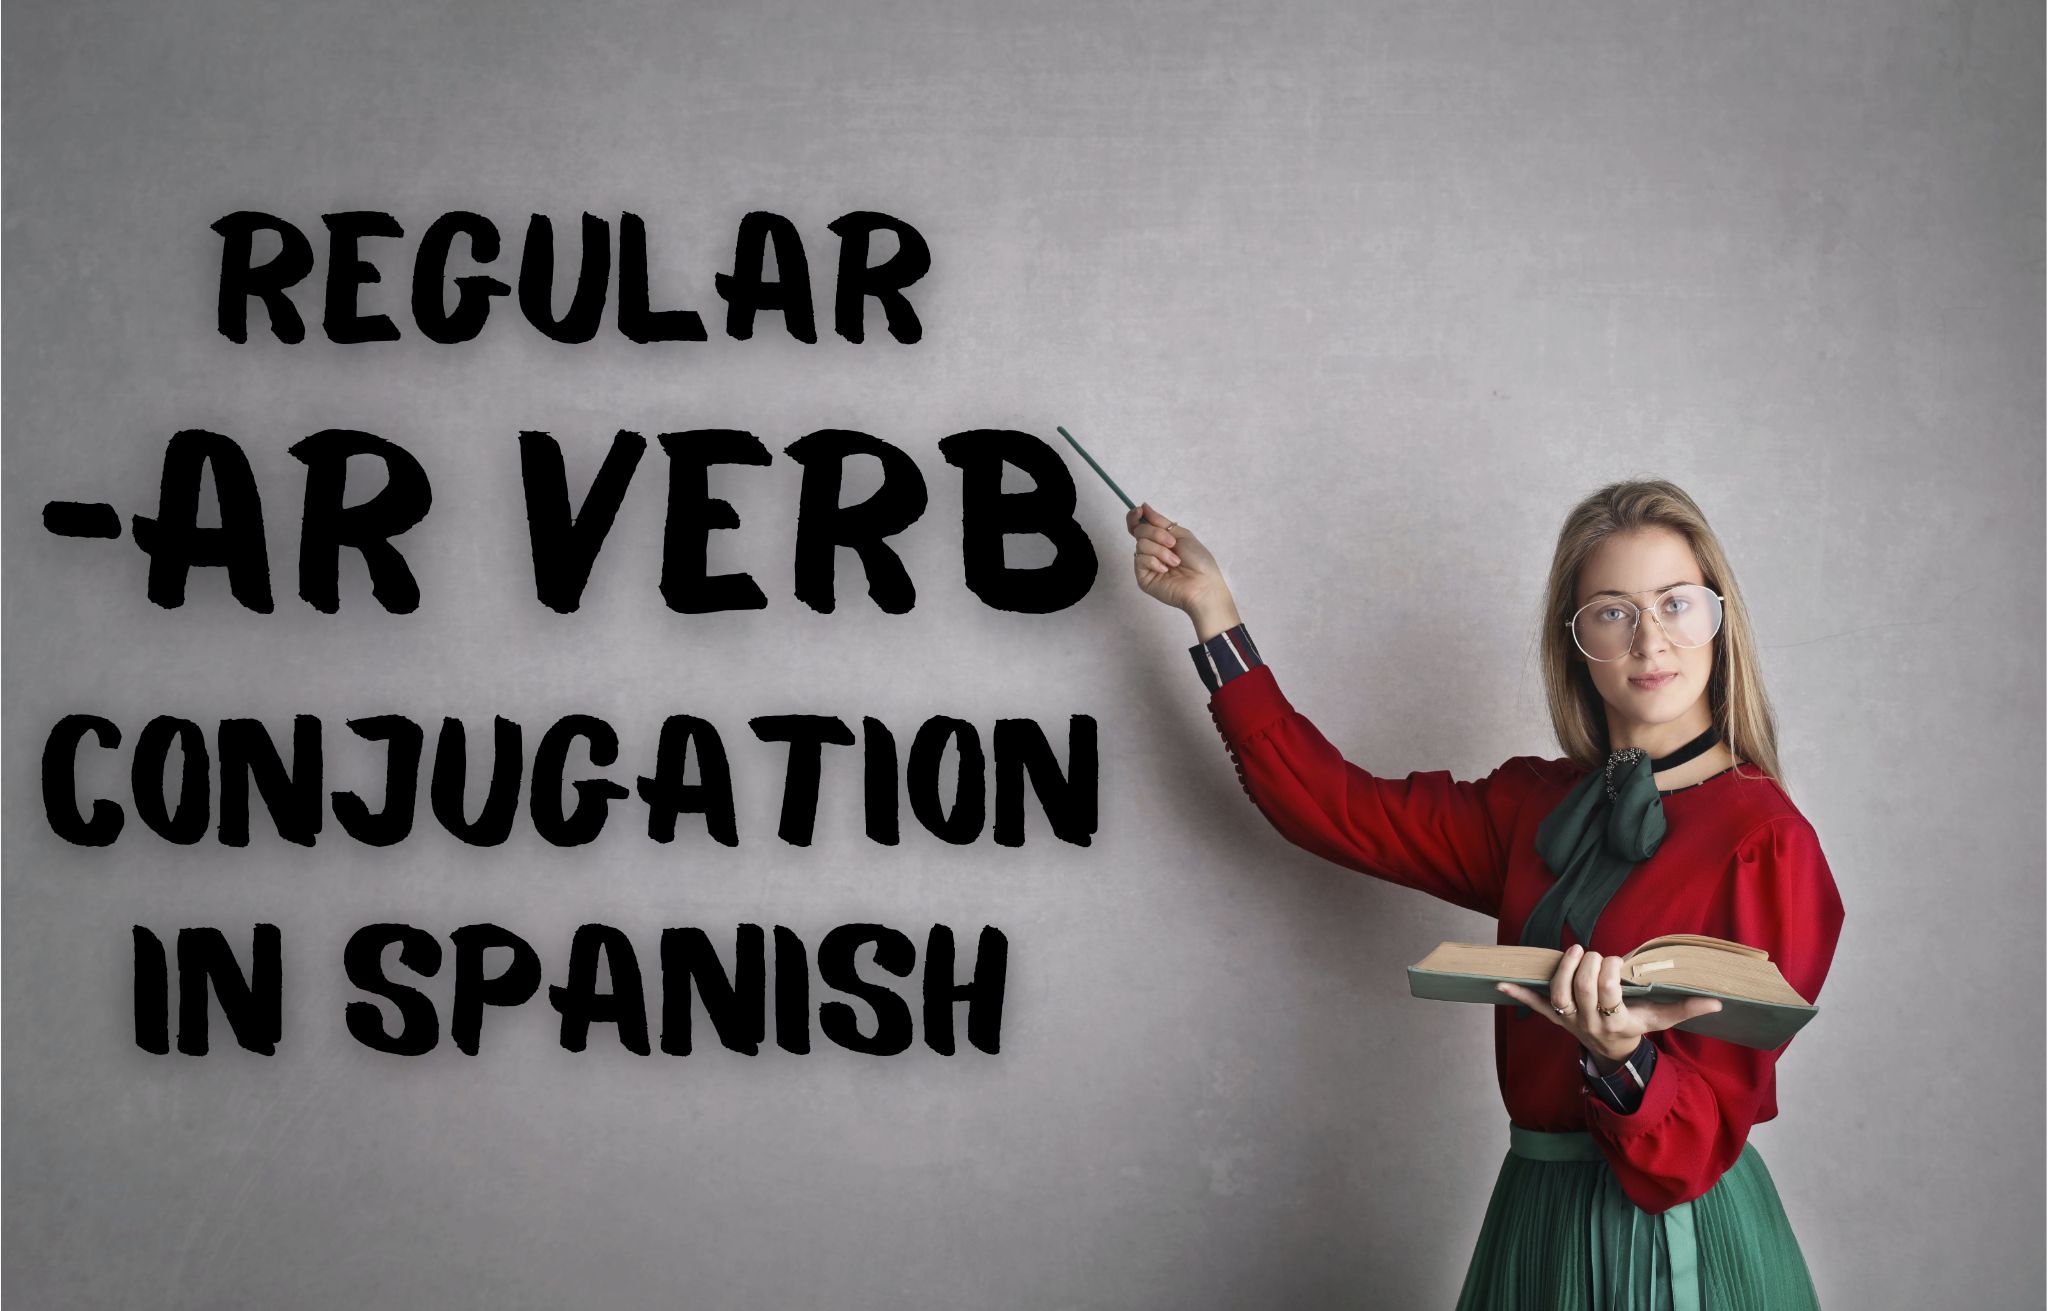 Regular AR verb conjugation in Spanish